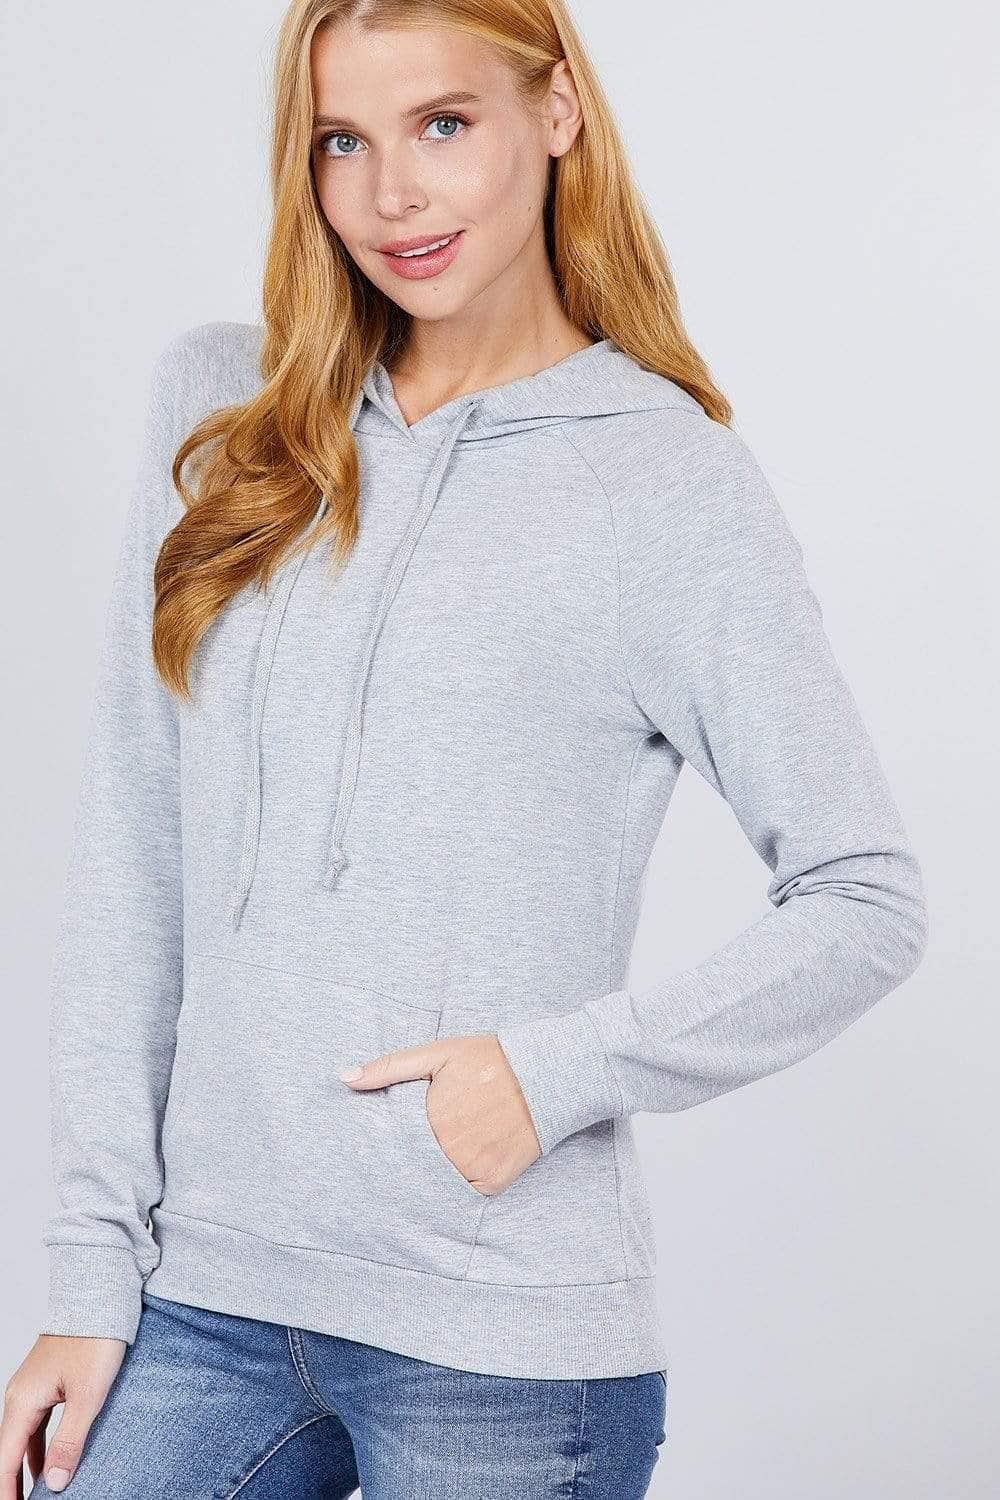 Heather Gray French Terry Long Sleeve Sweatshirt - Shopping Therapy S Sweatshirt